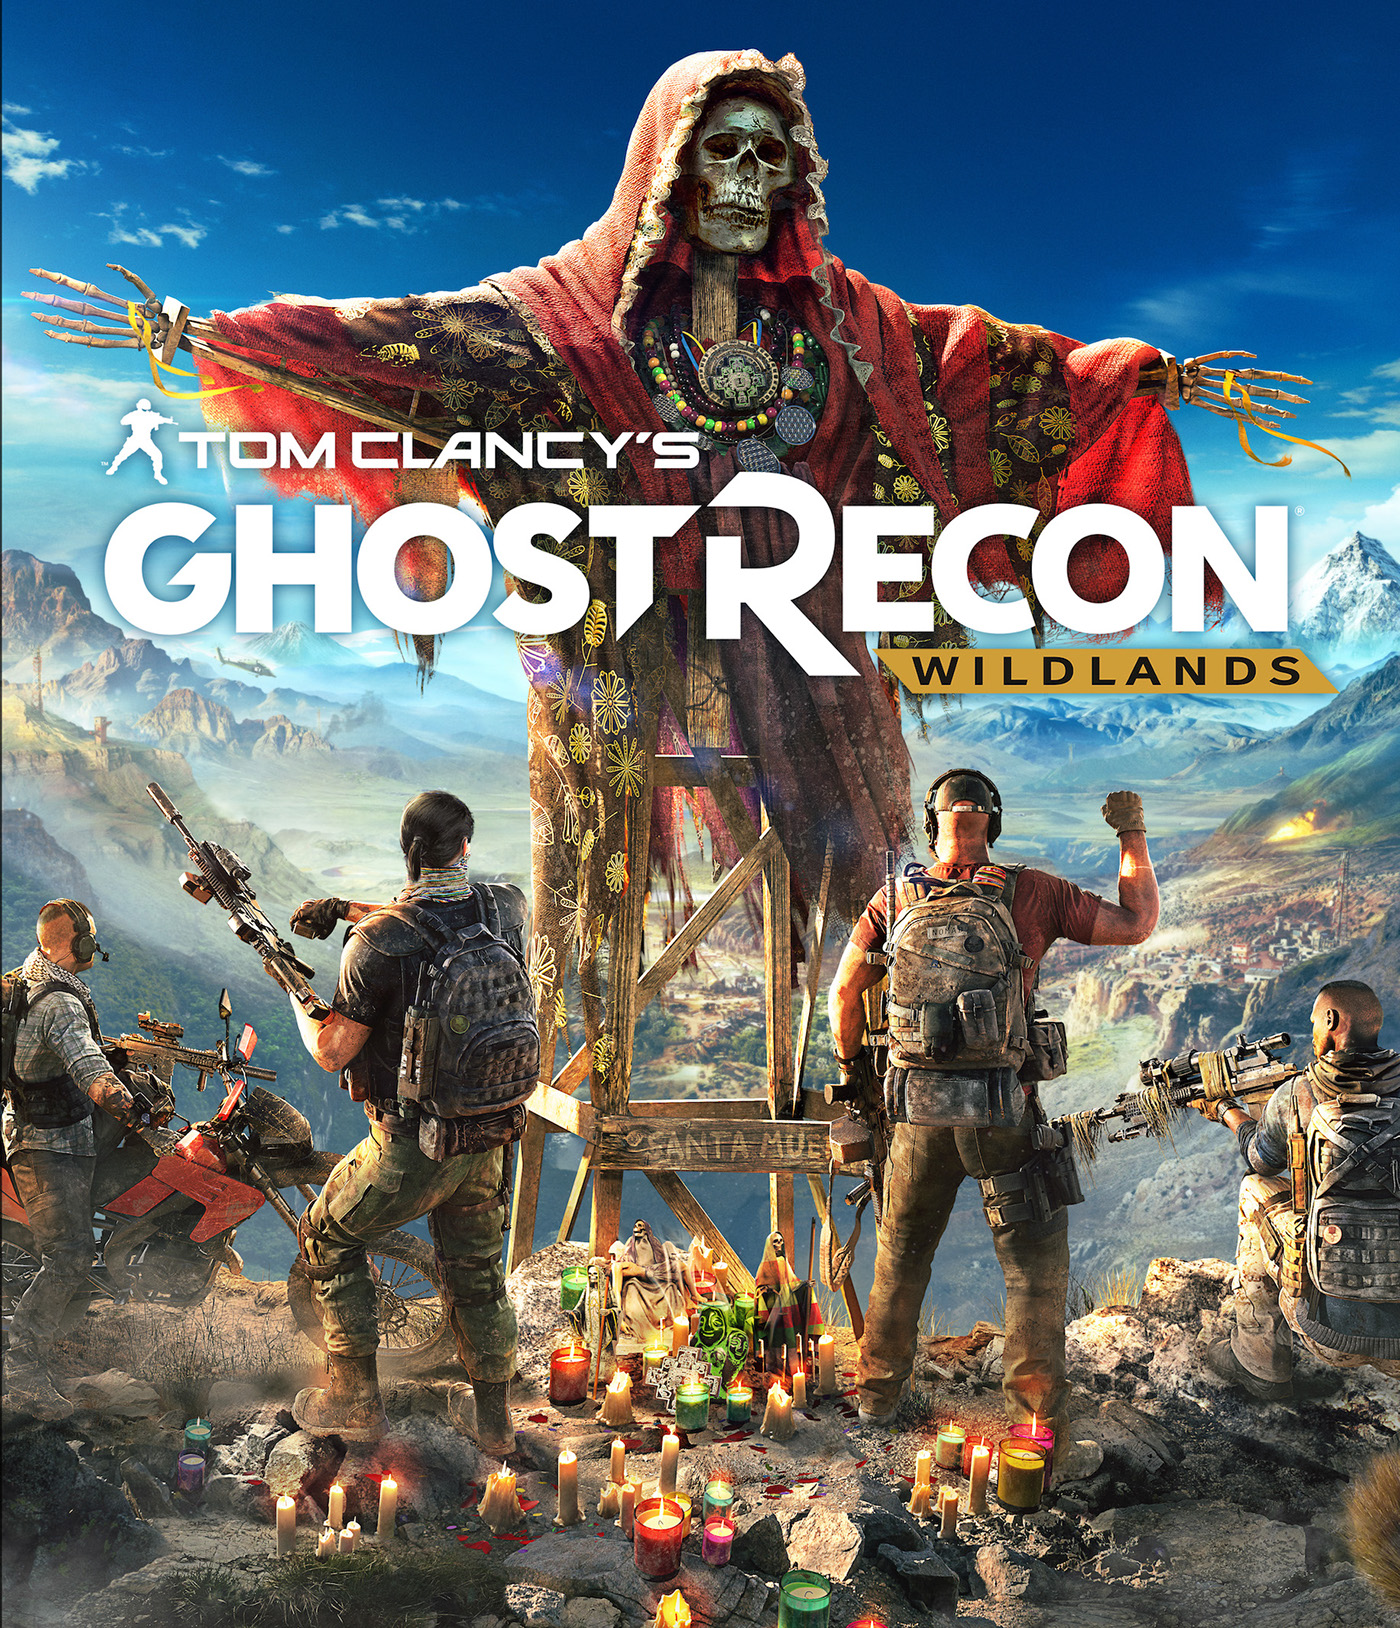 Ghost Recon wildlands ubisoft video game Pack santa muerte videogame game Tom Clancy